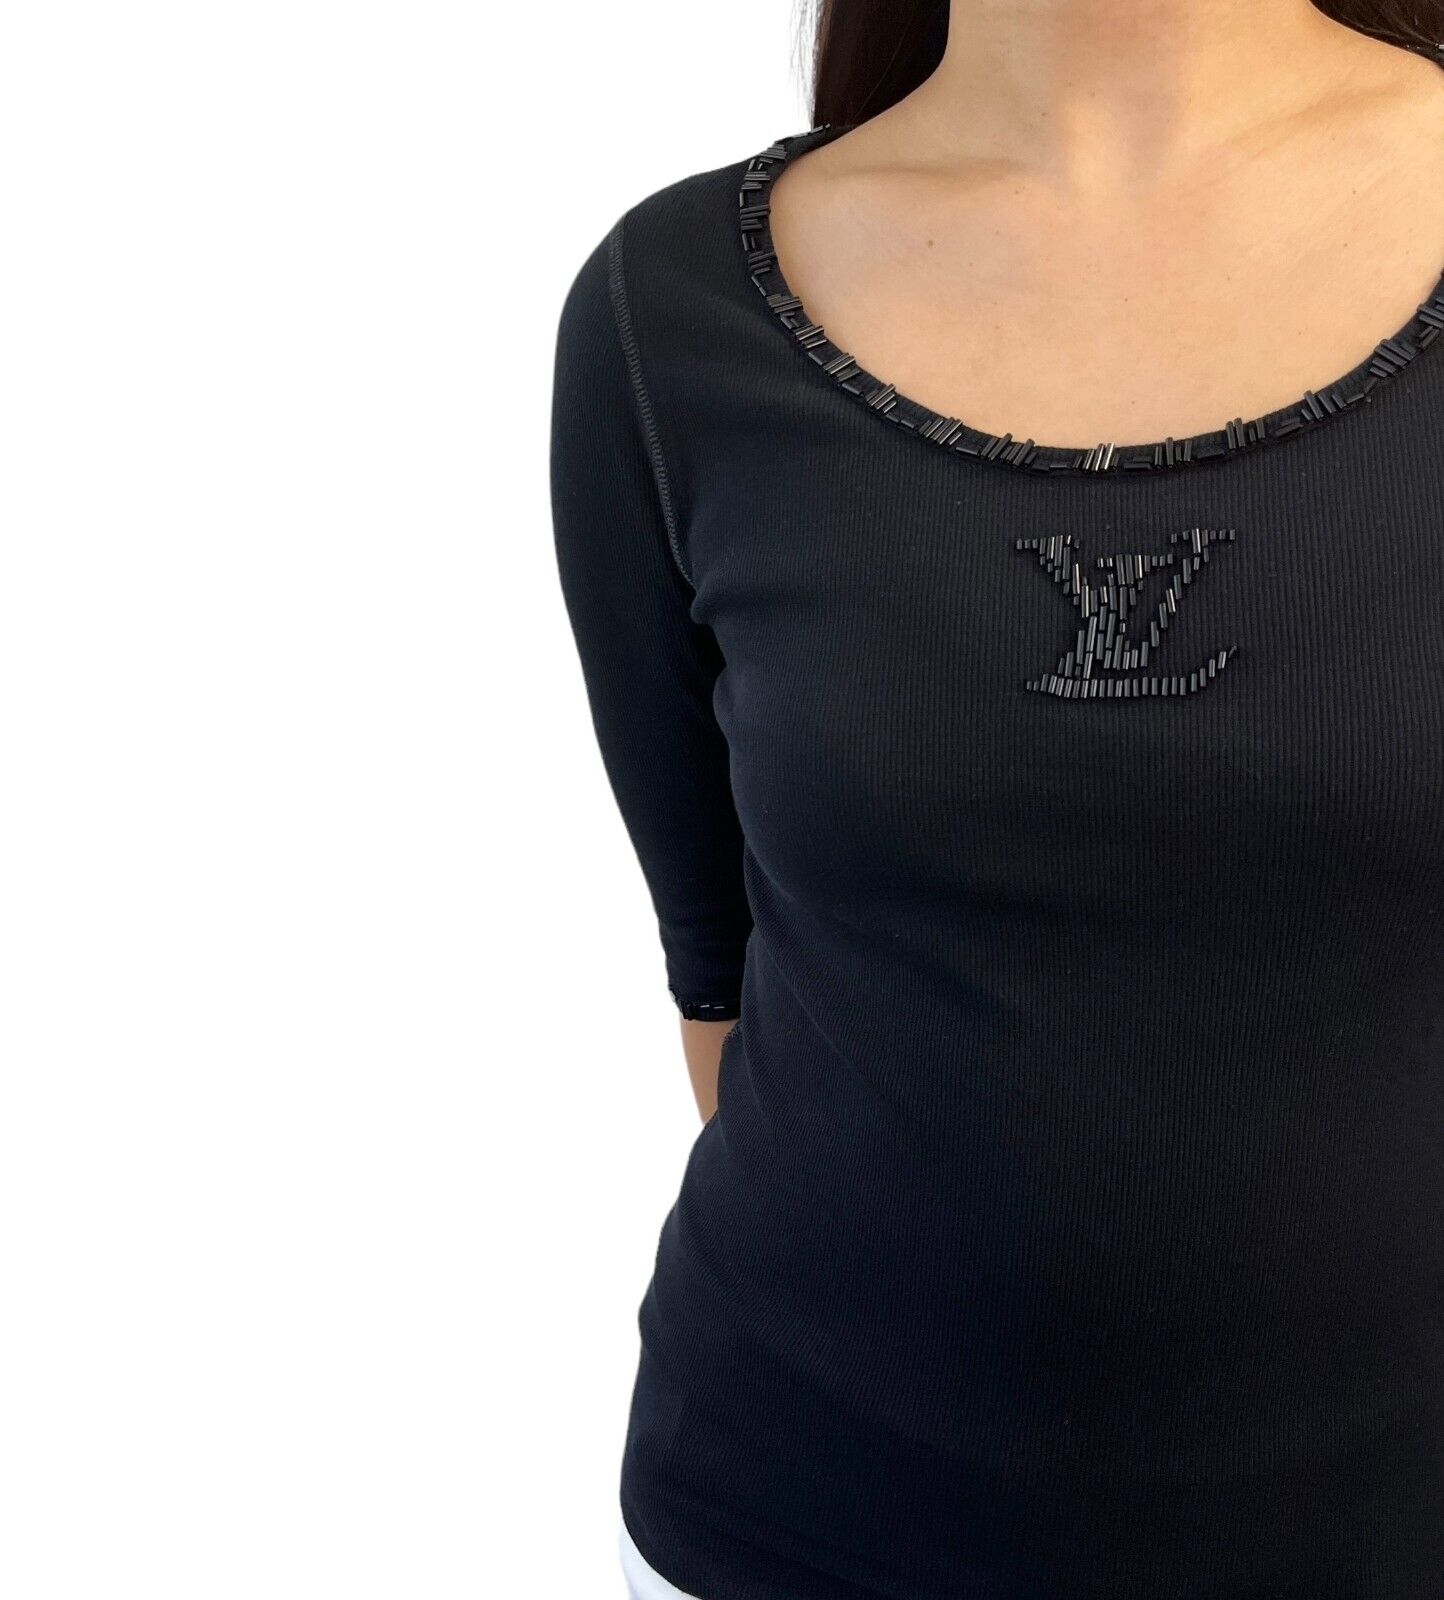 LOUIS VUITTON Vintage LV Beads Logo Top #M Short Sleeve Black Cotton Rank AB+